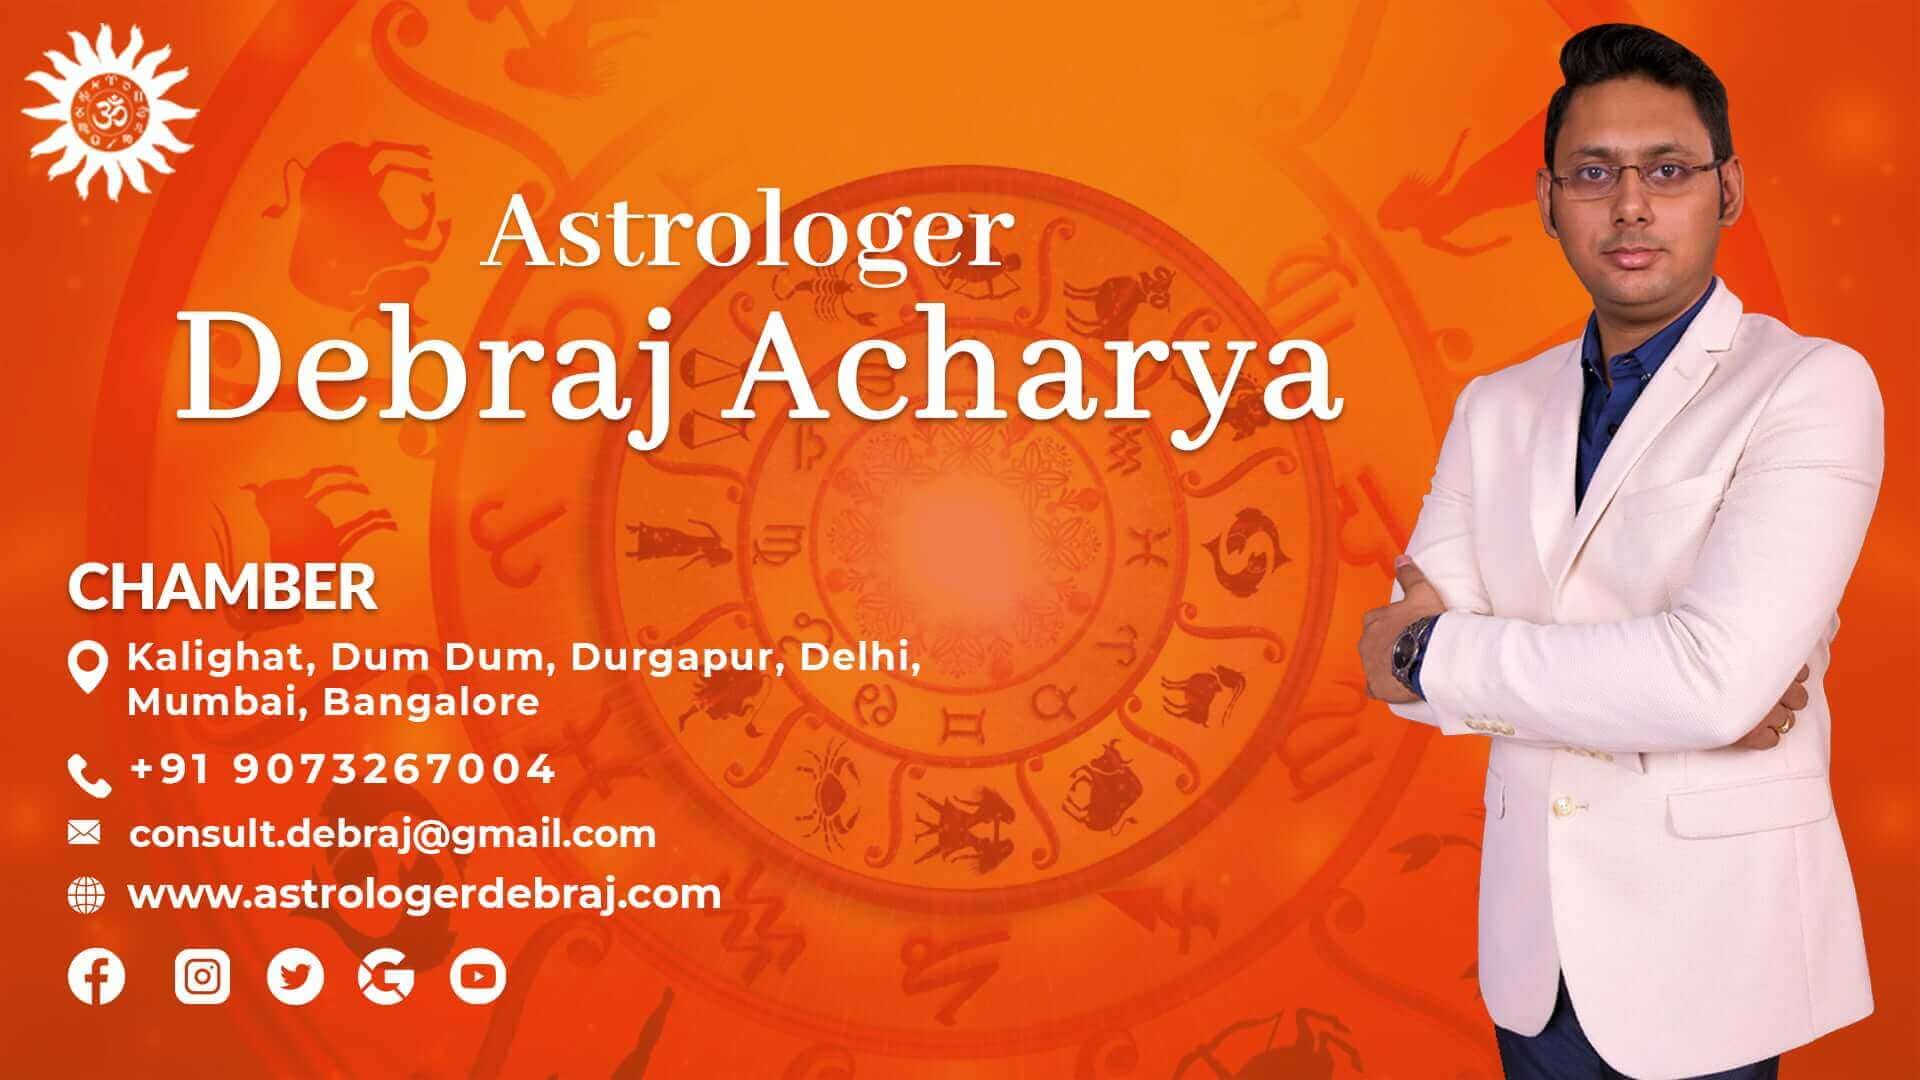 Banner of best Astrologer Debraj Acharya practice in Kolkata, India